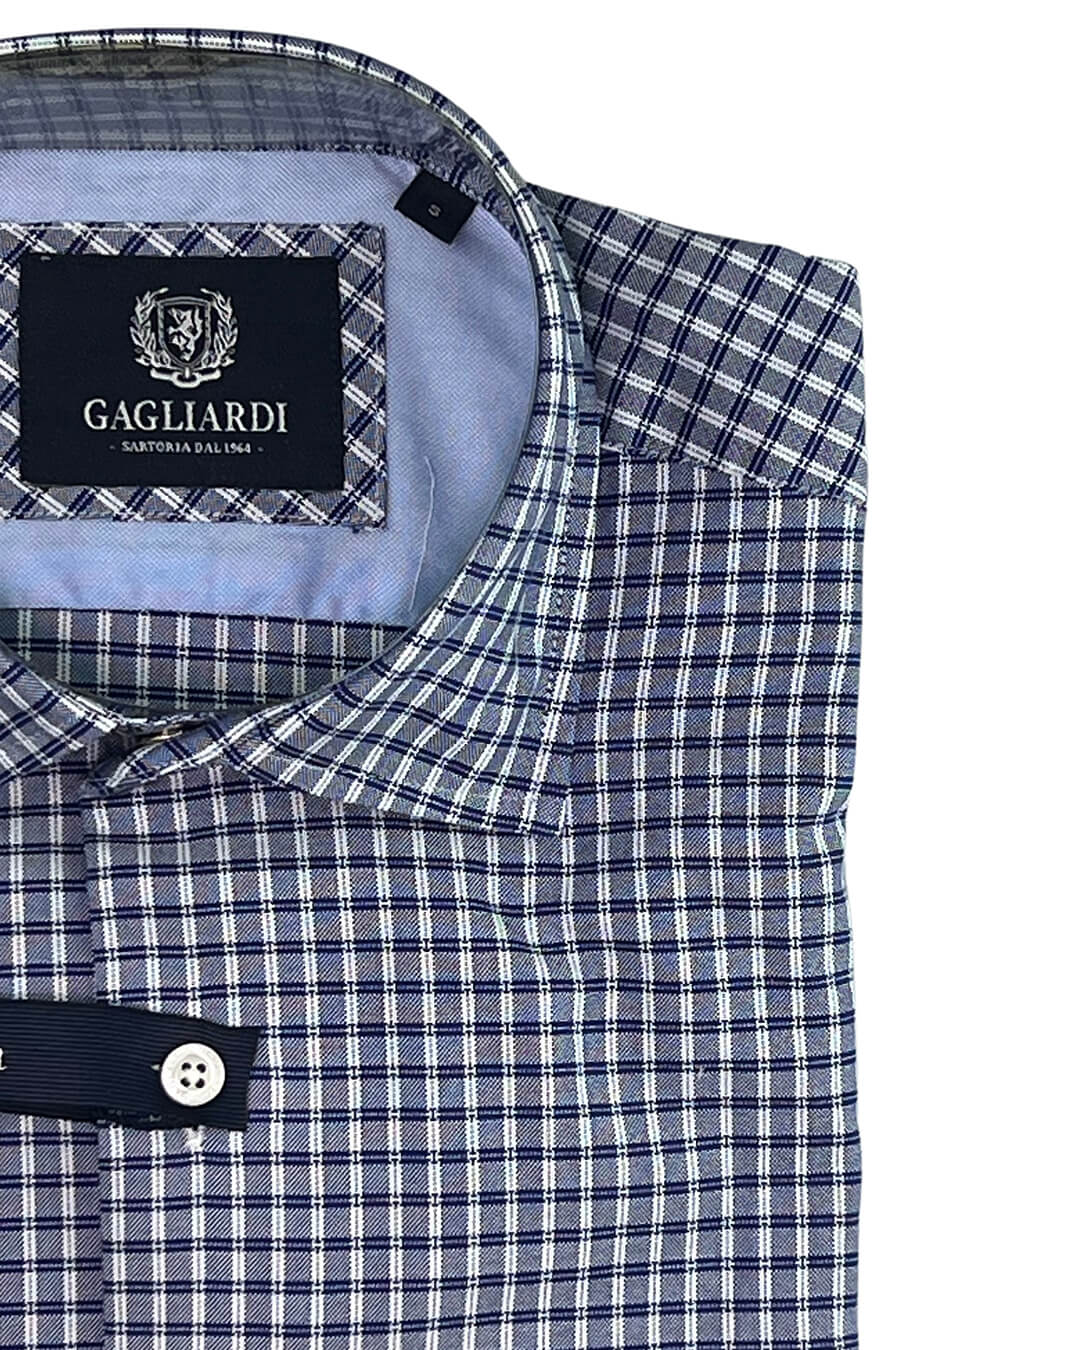 Gagliardi Shirts Gagliardi Oxford With Check Shirt